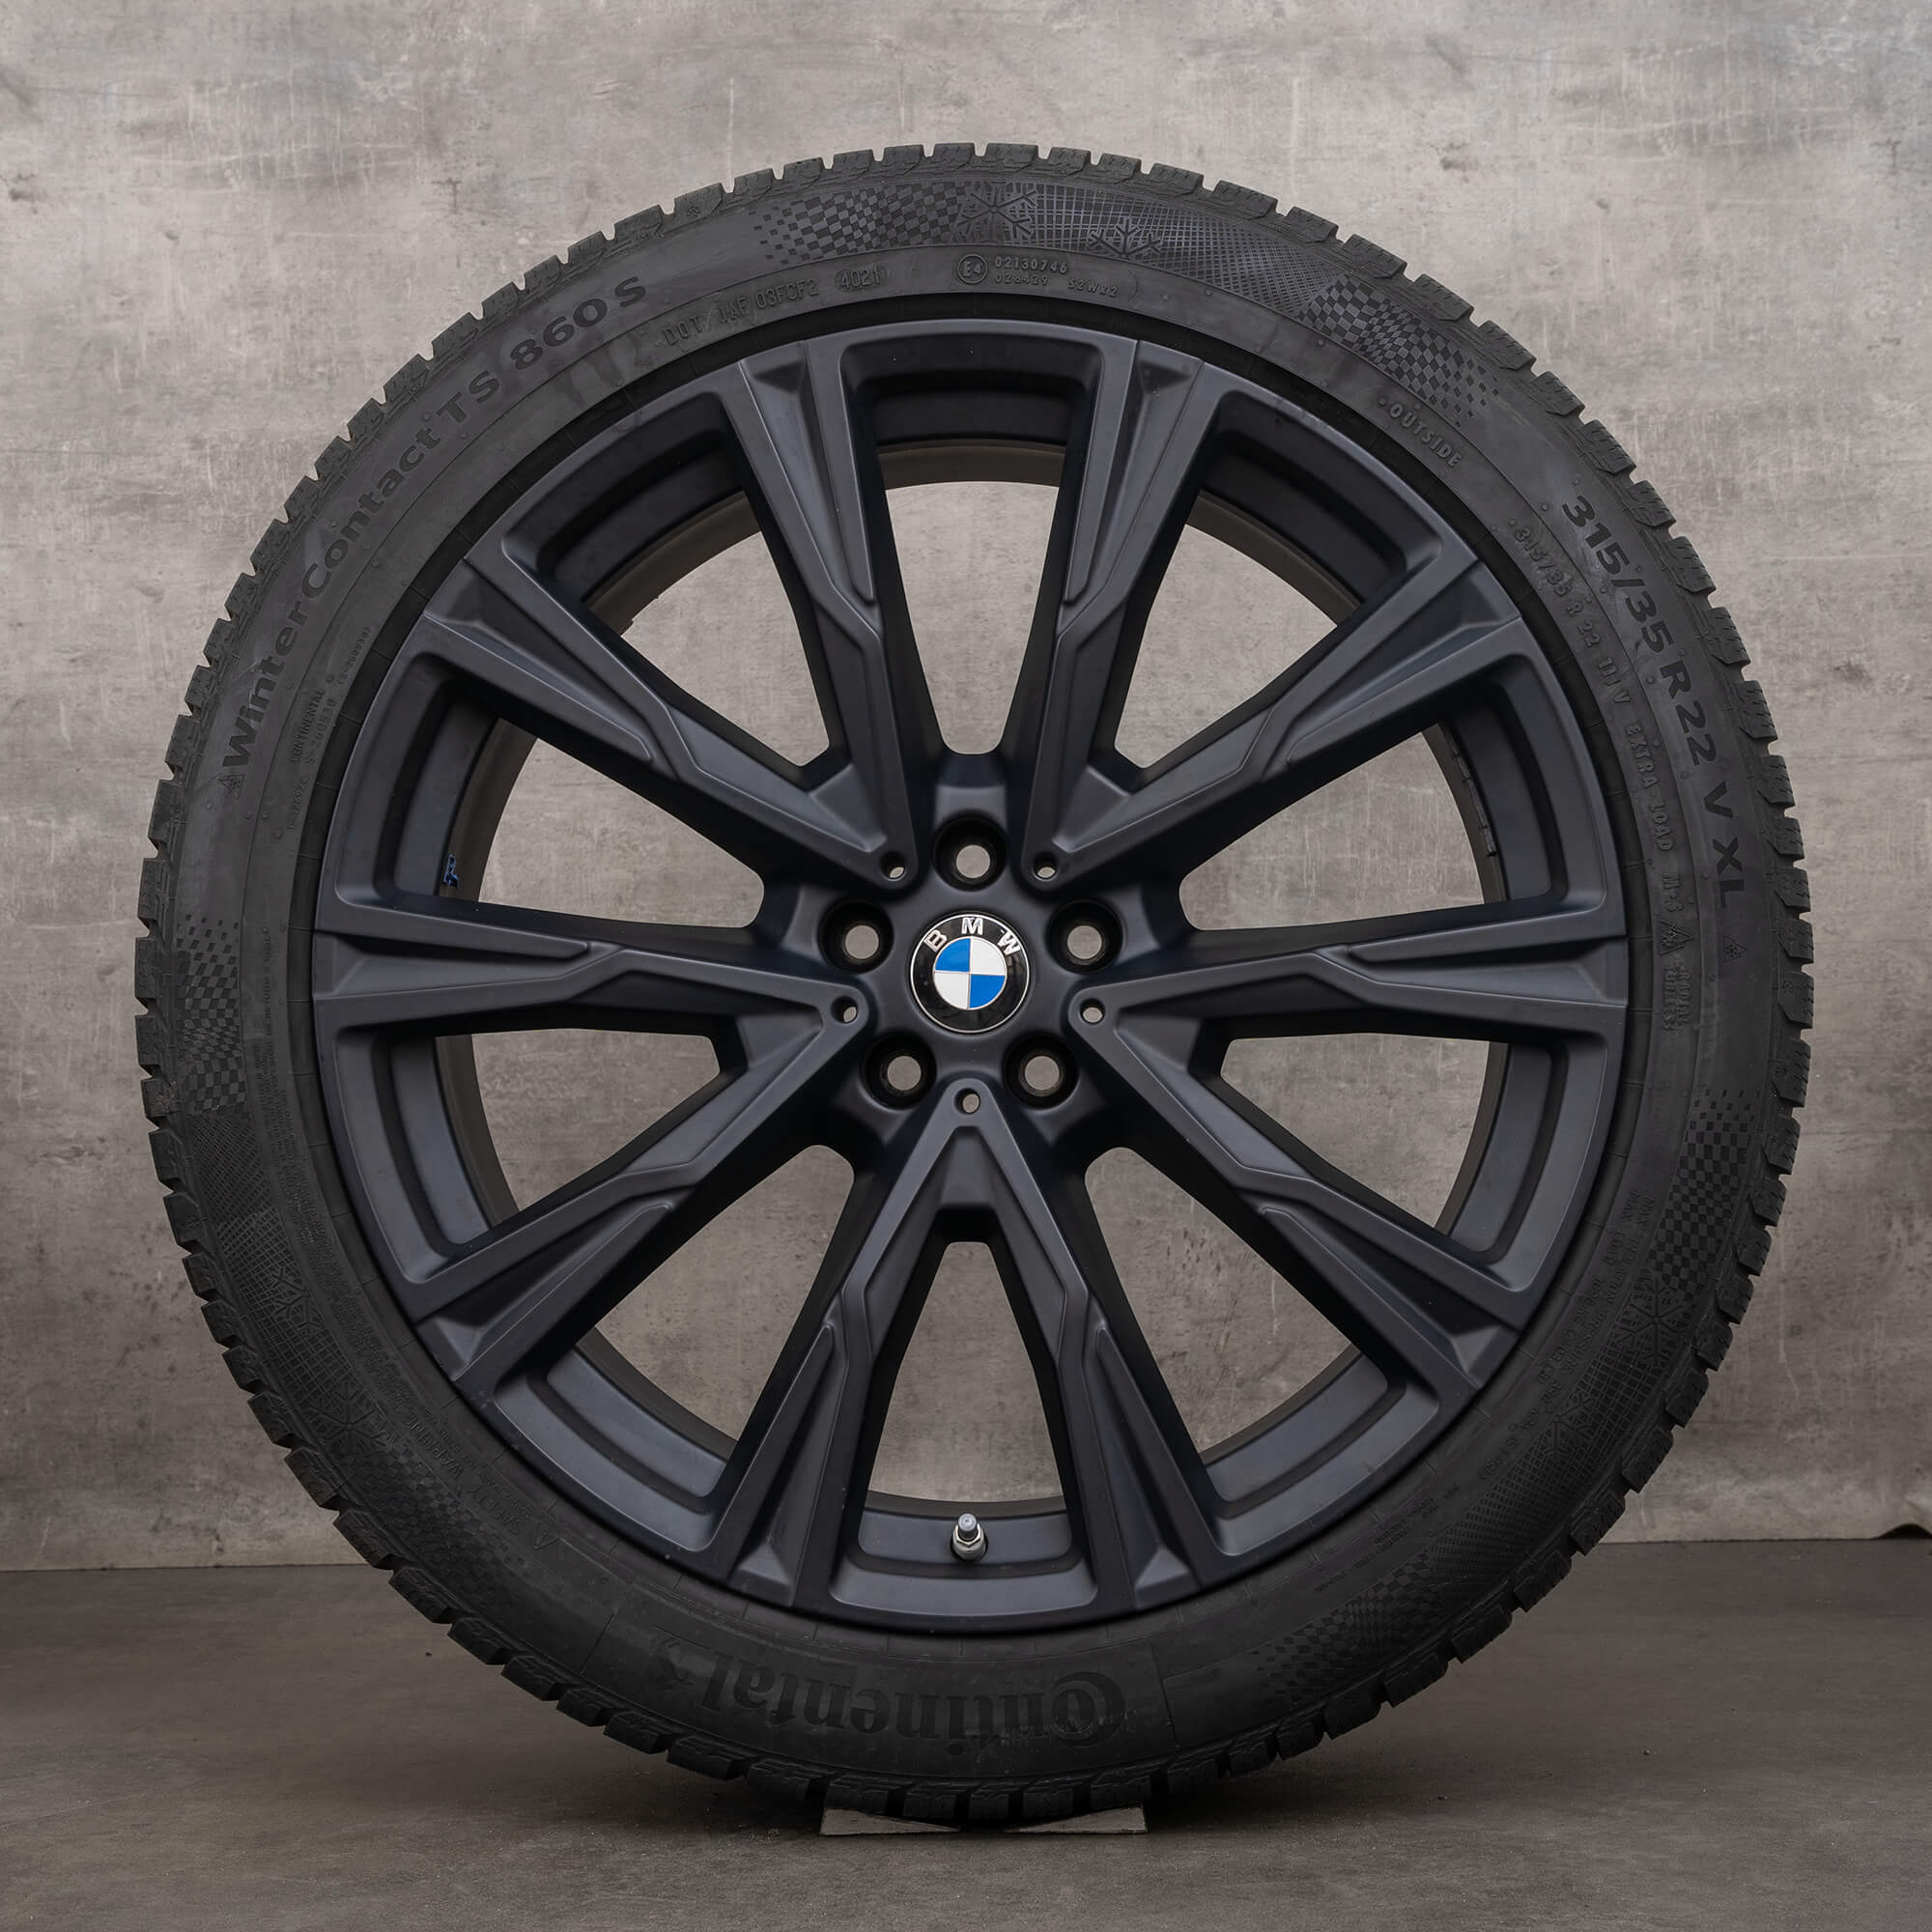 BMW X7 G07 winter wheels 22 inch rims tires 8074222 8090109 Styling 758